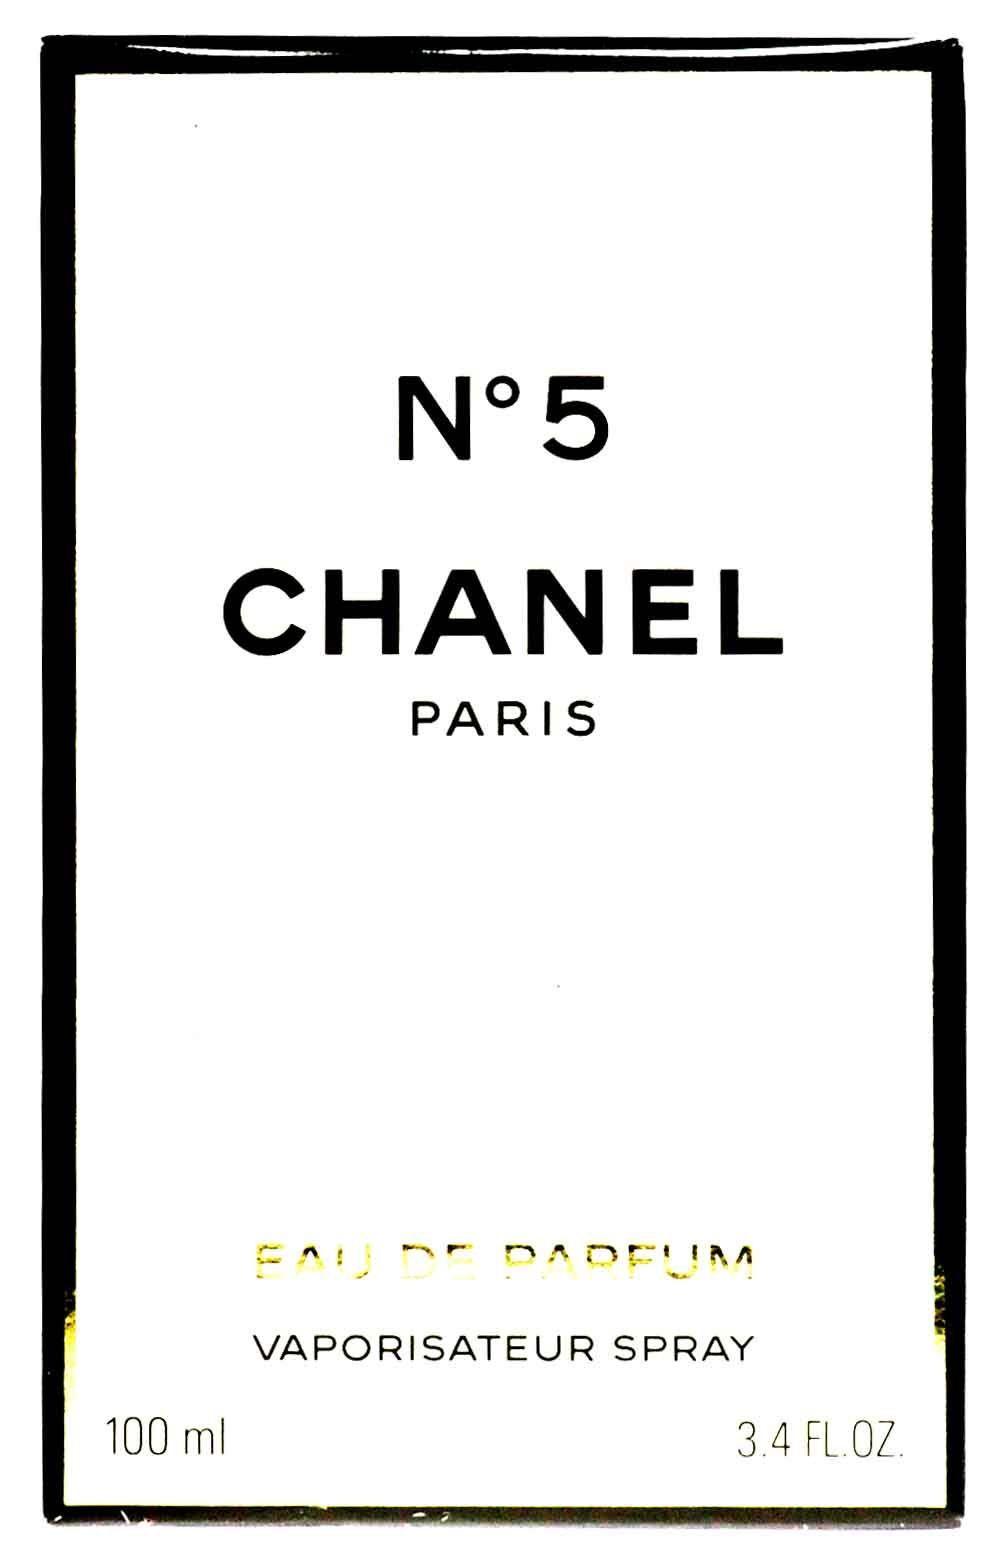 Chanel Number 5 Perfume Logo - Chanel no 5 Logos